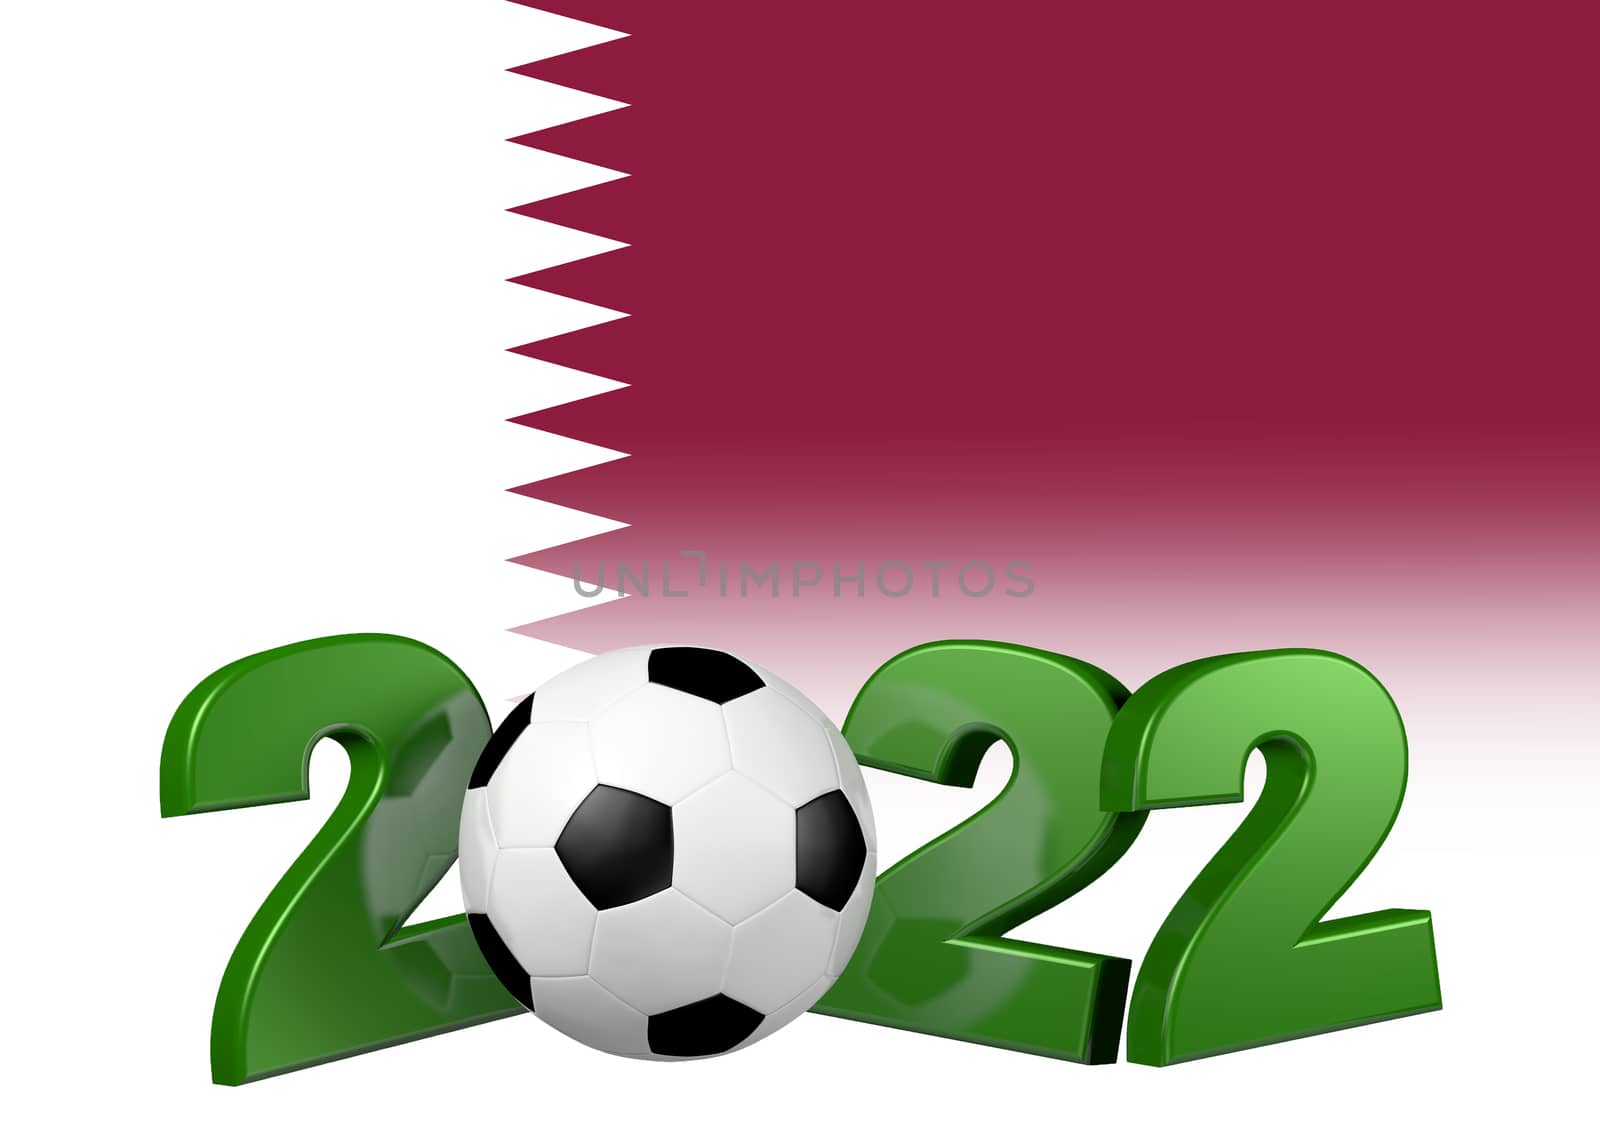 Green Football 2022 design with Qatar Flag